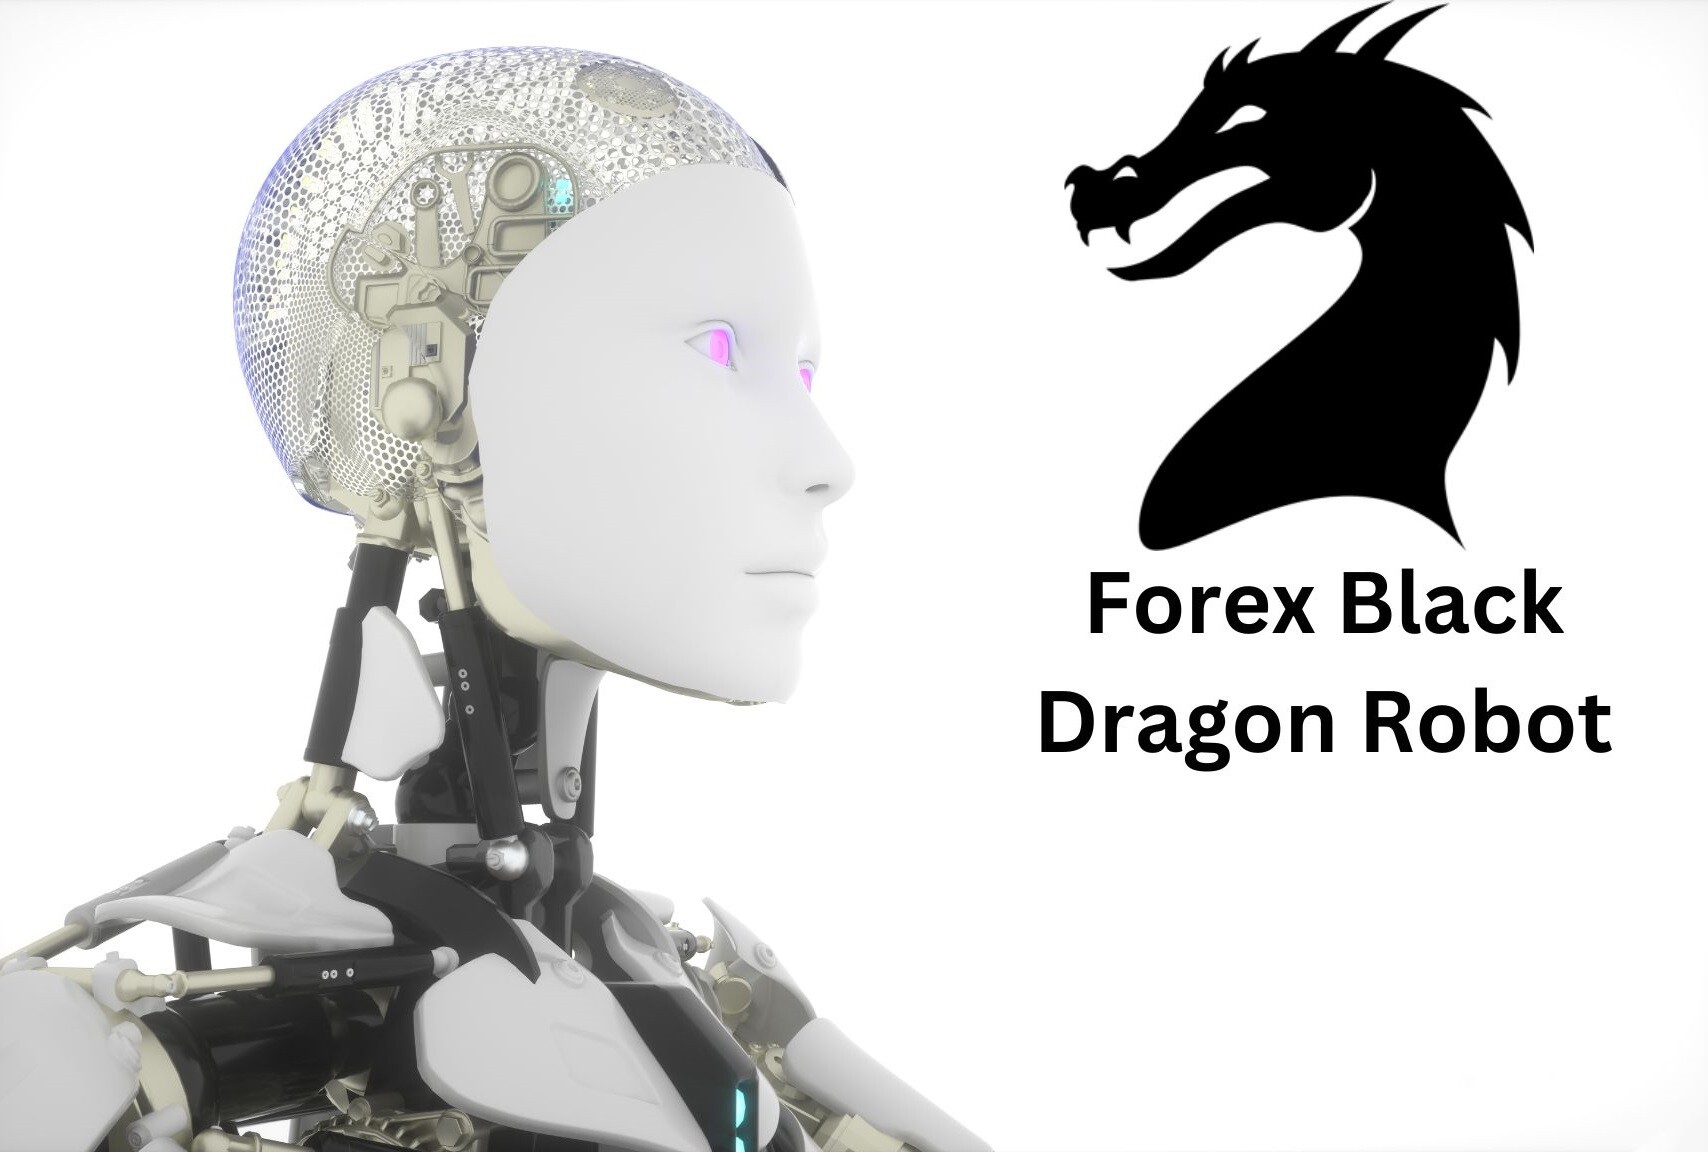 Forex Black Dragon Robot